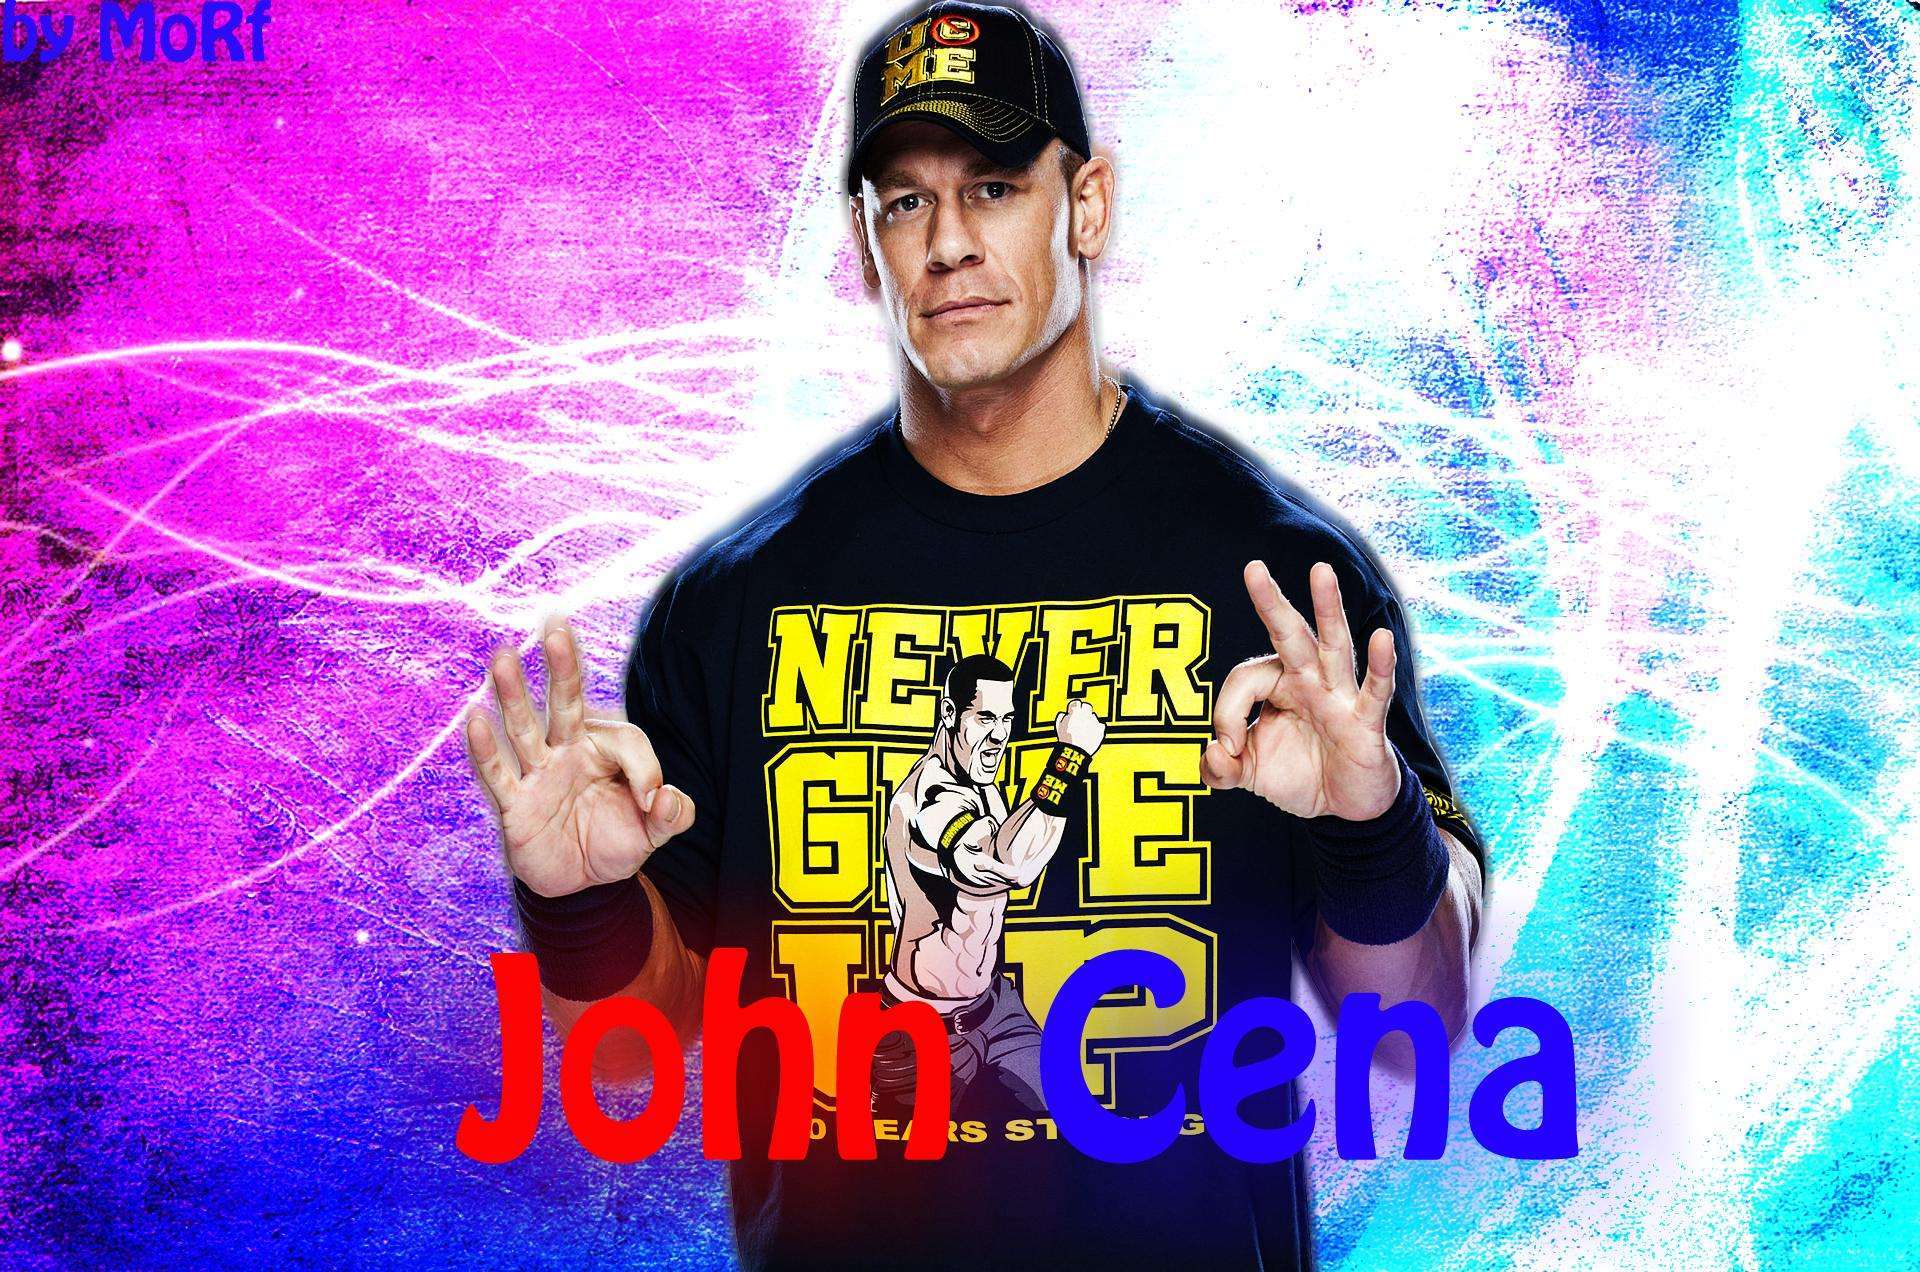 John Cena Wallpaper High Quality